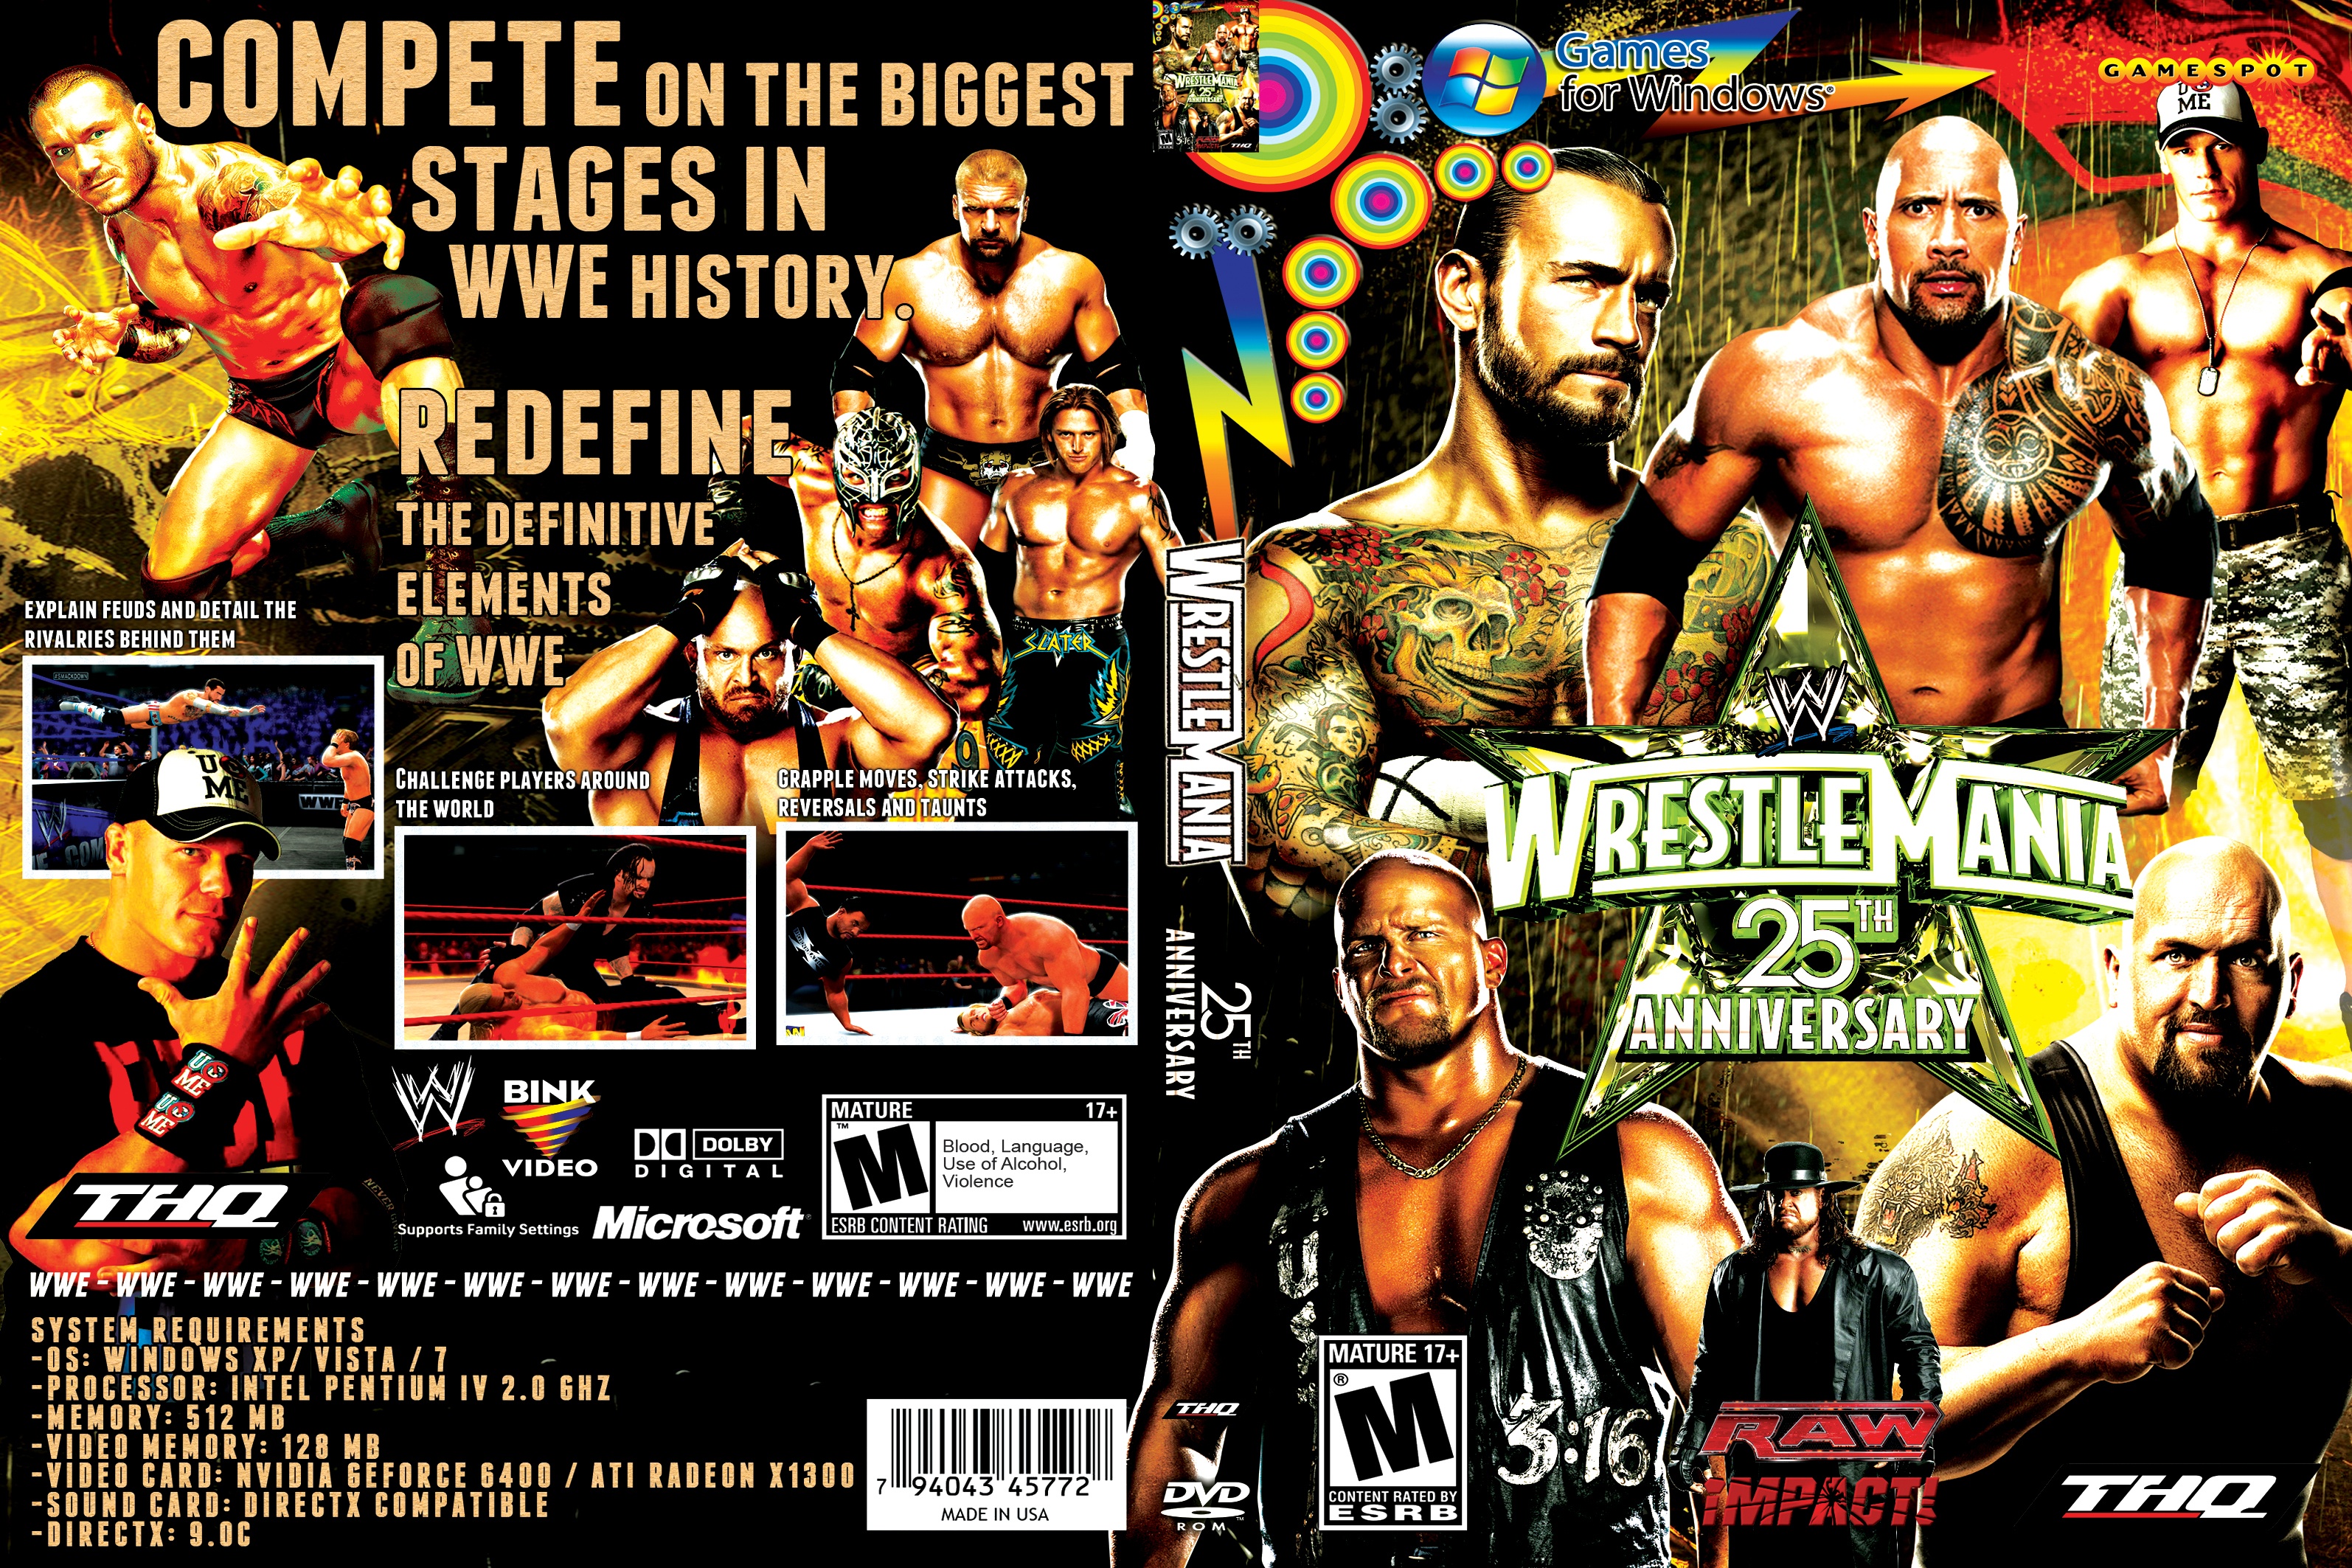 Wrestlemania 25: The Game box cover